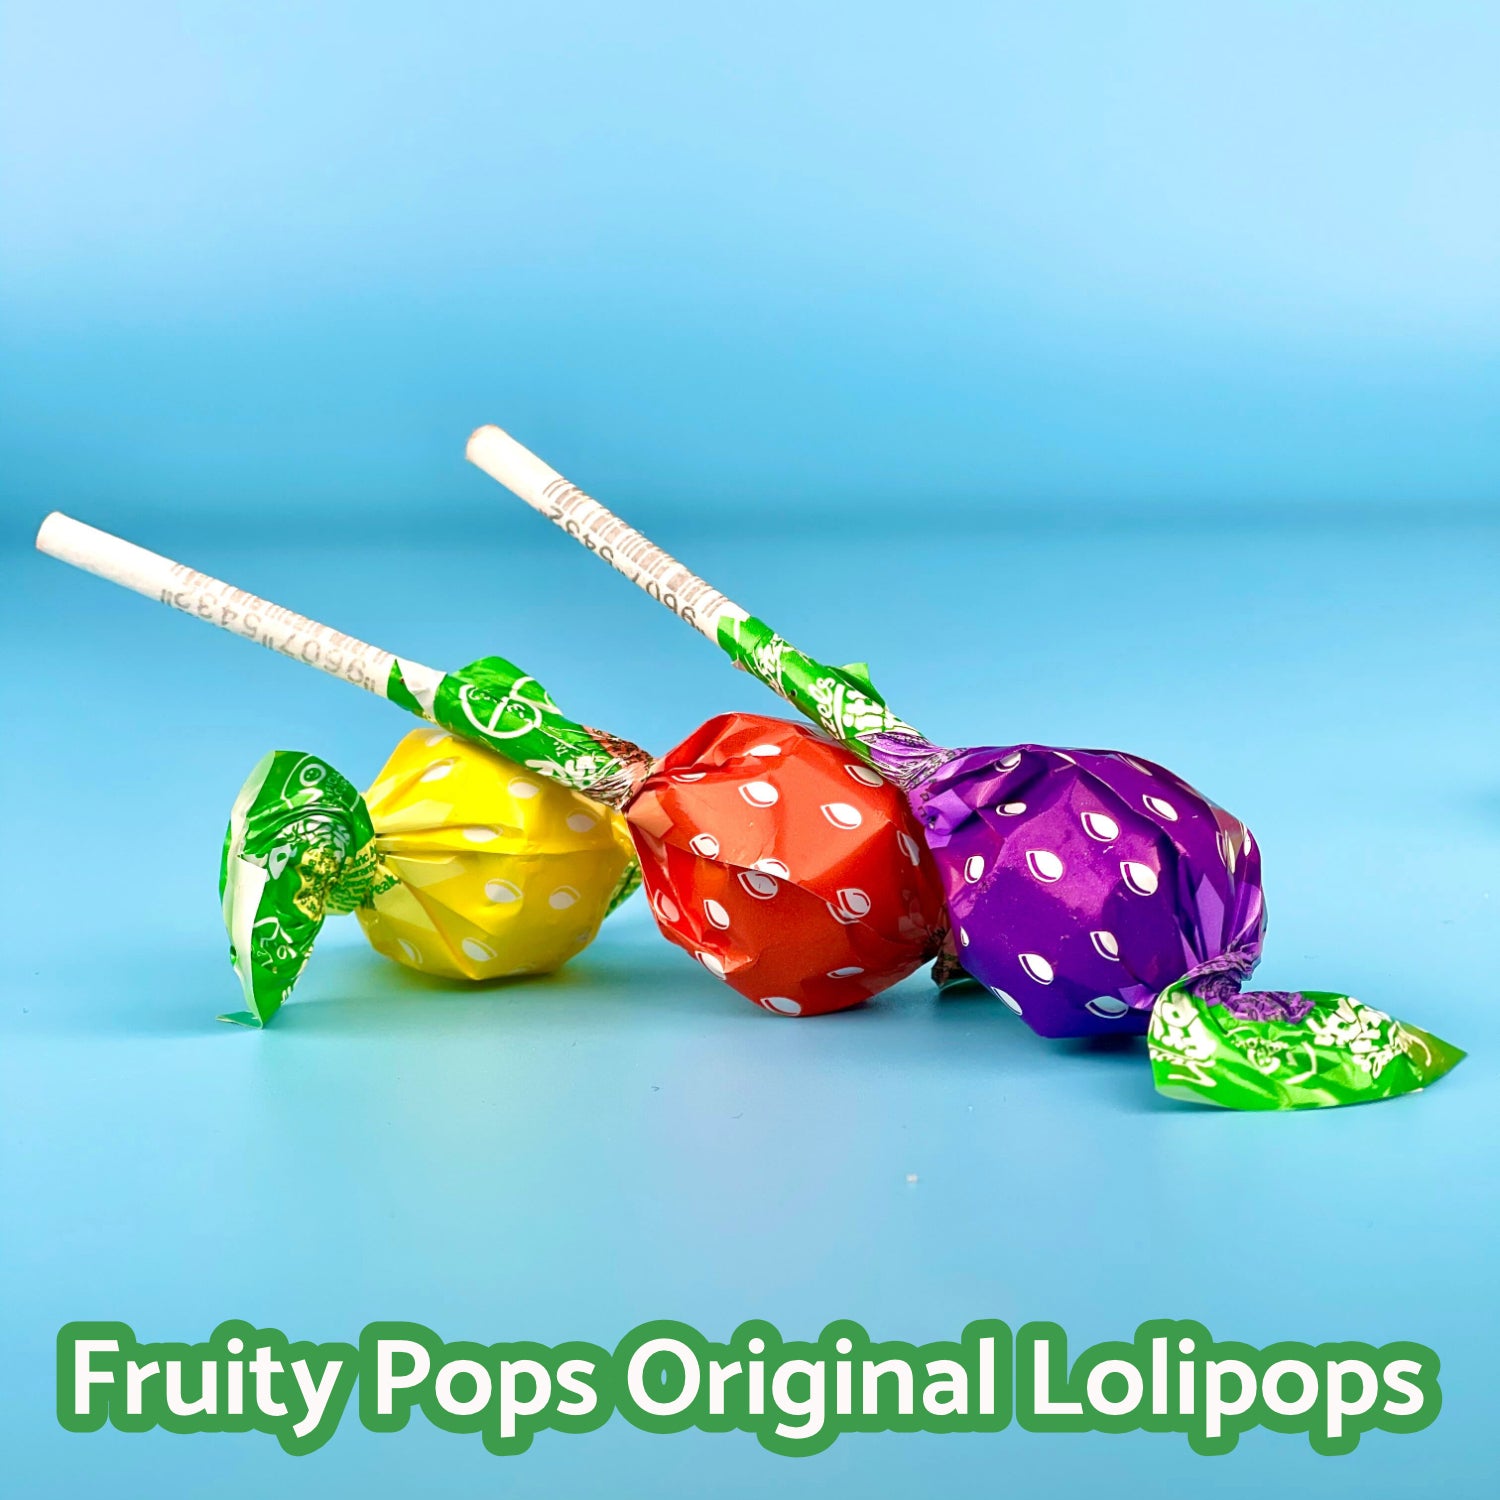 Fruity Pops Original Lollipops